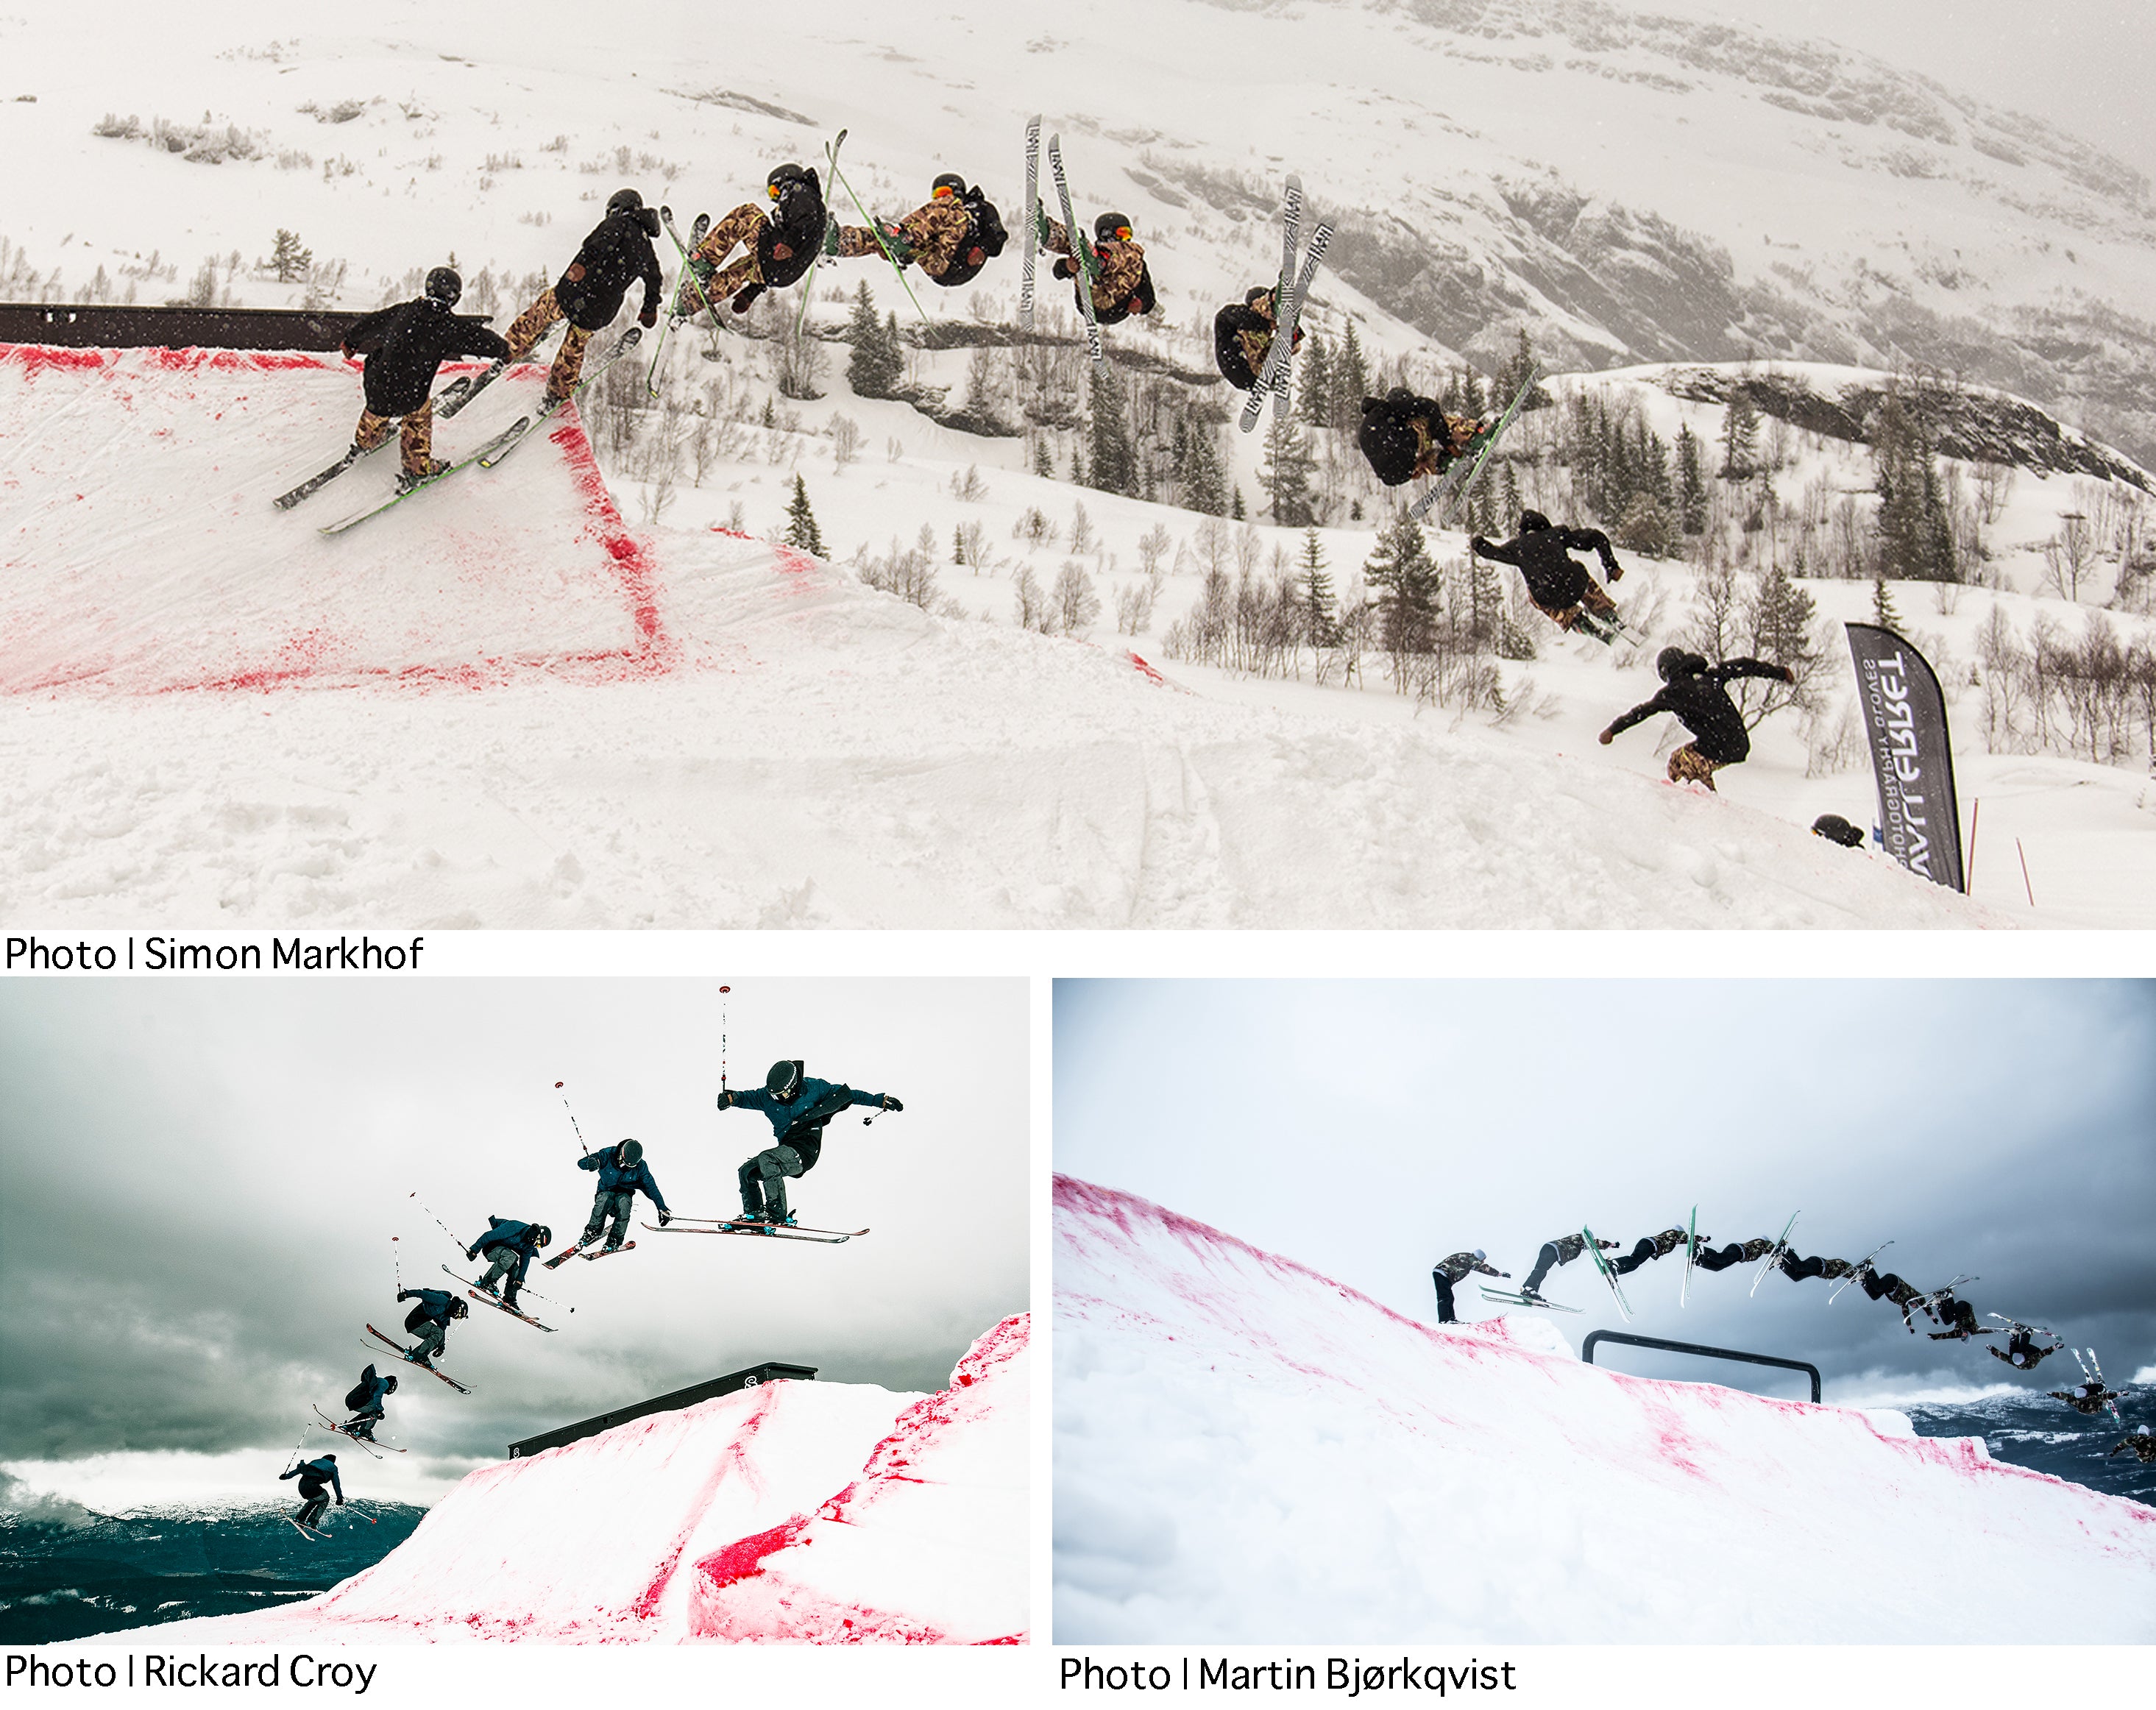 skier jump sequences